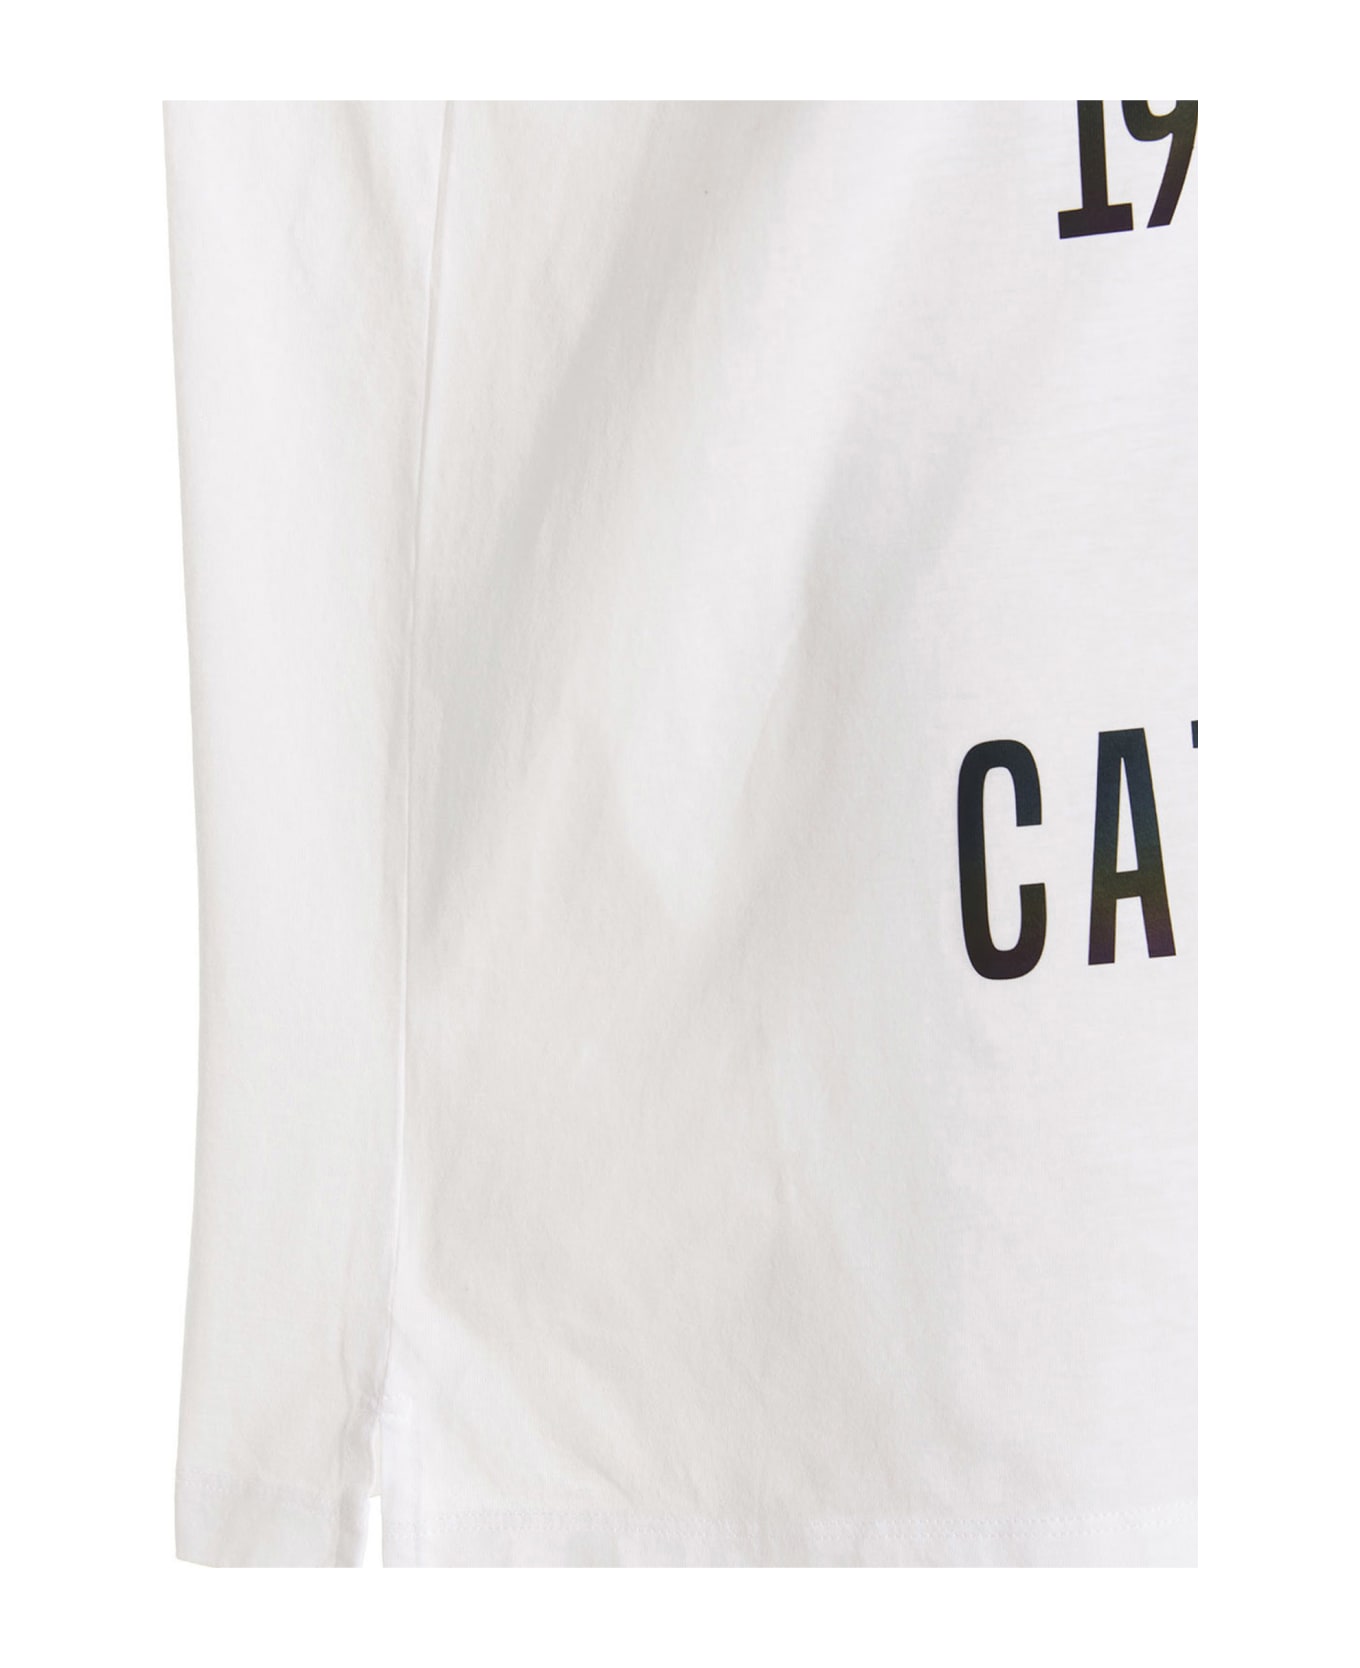 Dsquared2 T-shirt 'd2 Caten's Beach' - White